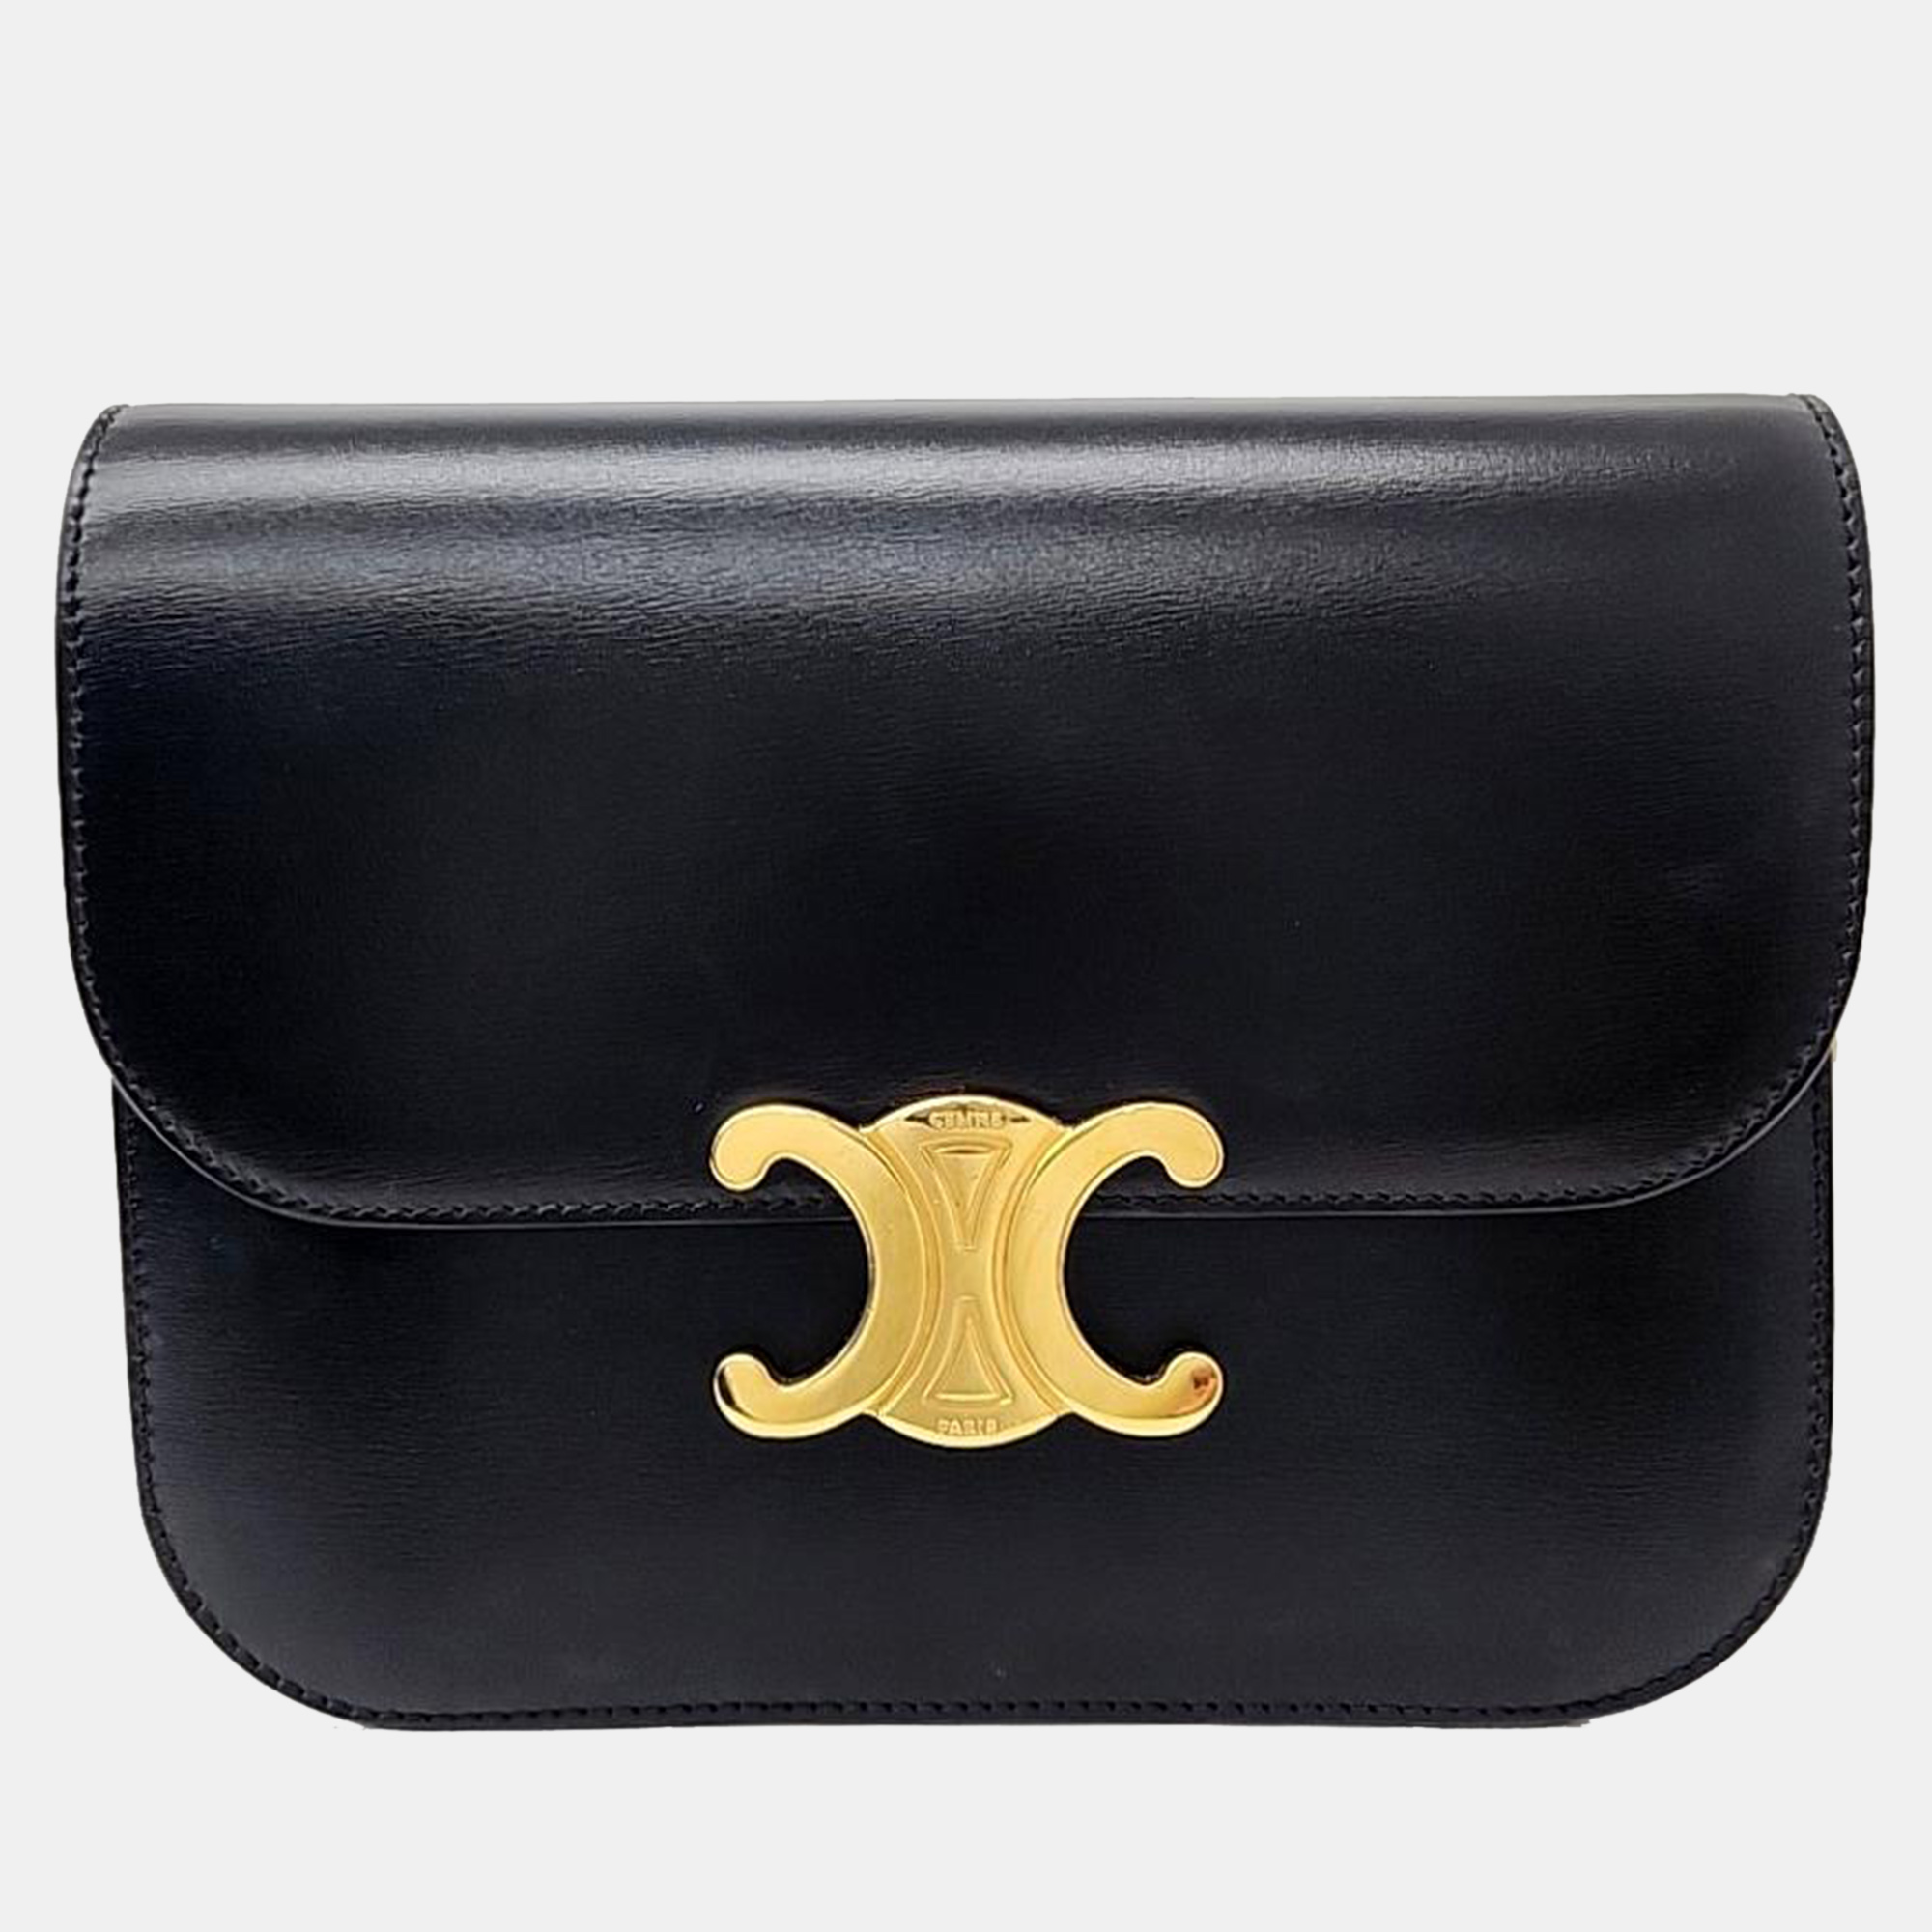 Celine black leather medium triopnhe classique shoulder bag